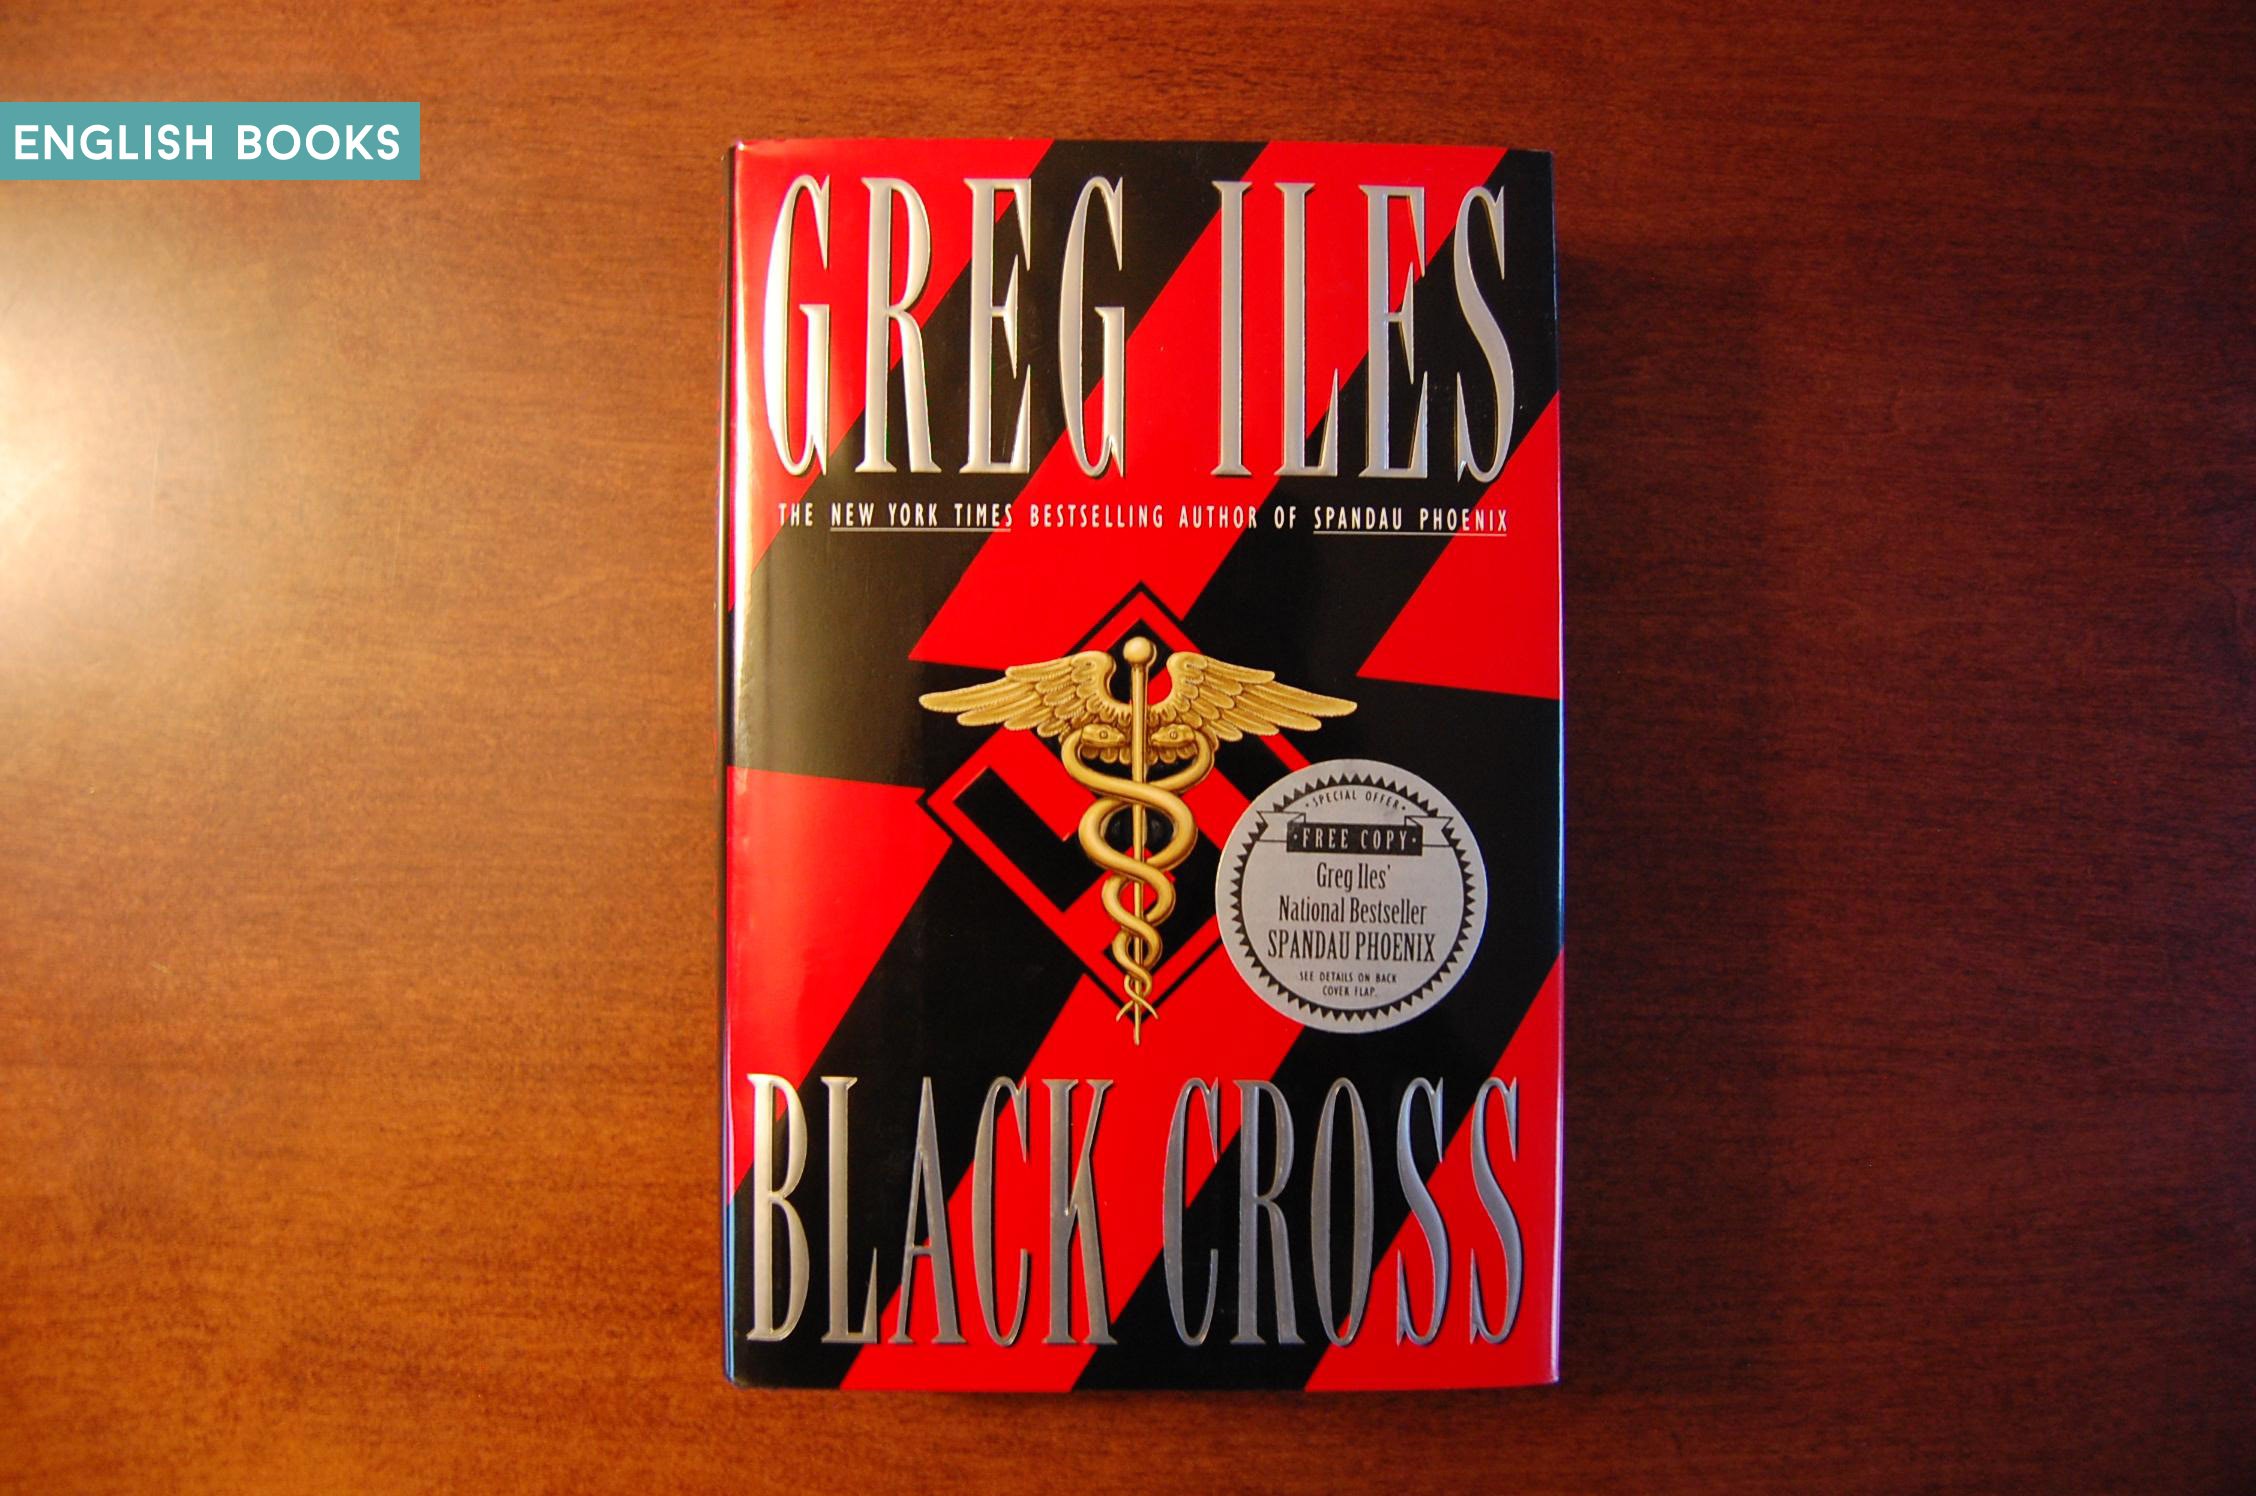 Greg Iles — Black Cross